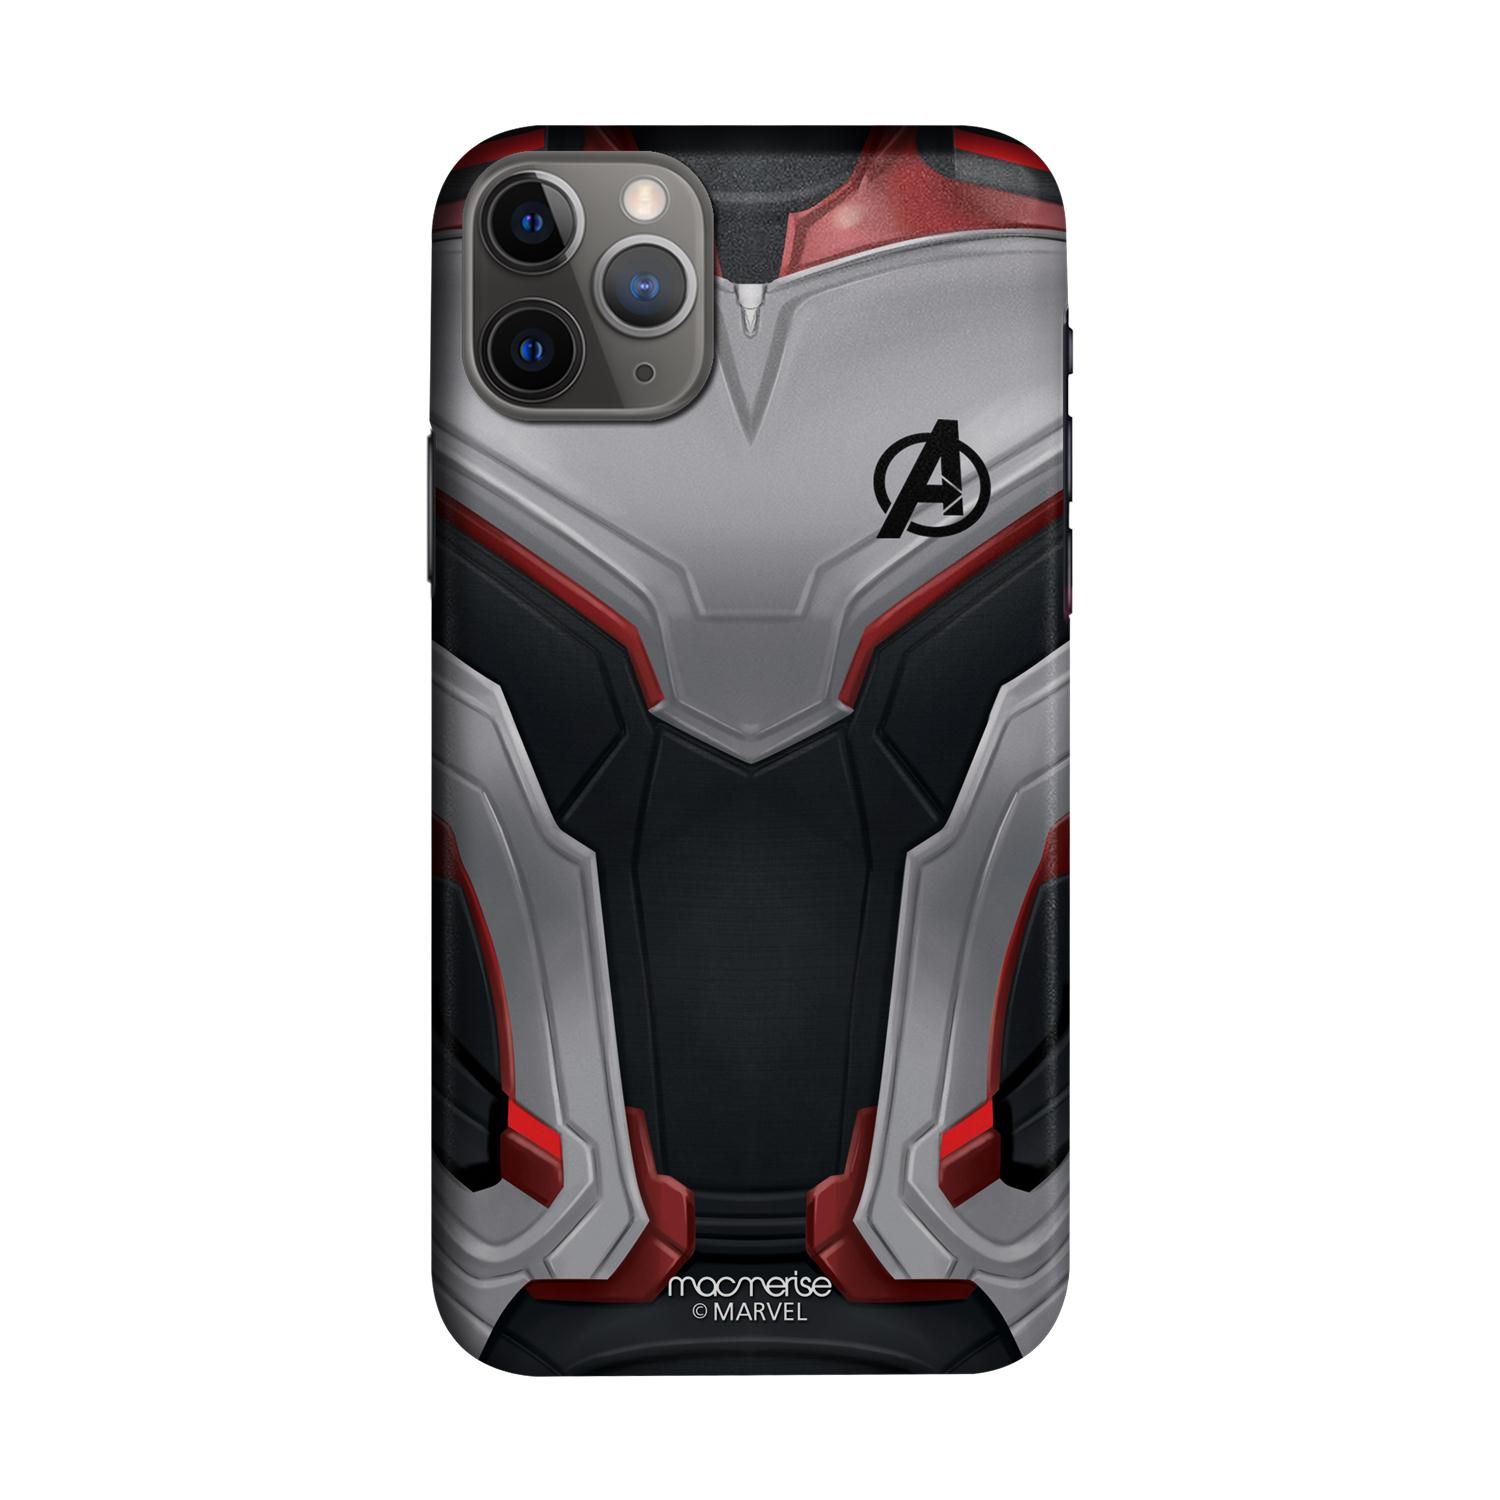 Buy Avengers Endgame Suit - Sleek Phone Case for iPhone 11 Pro Max Online